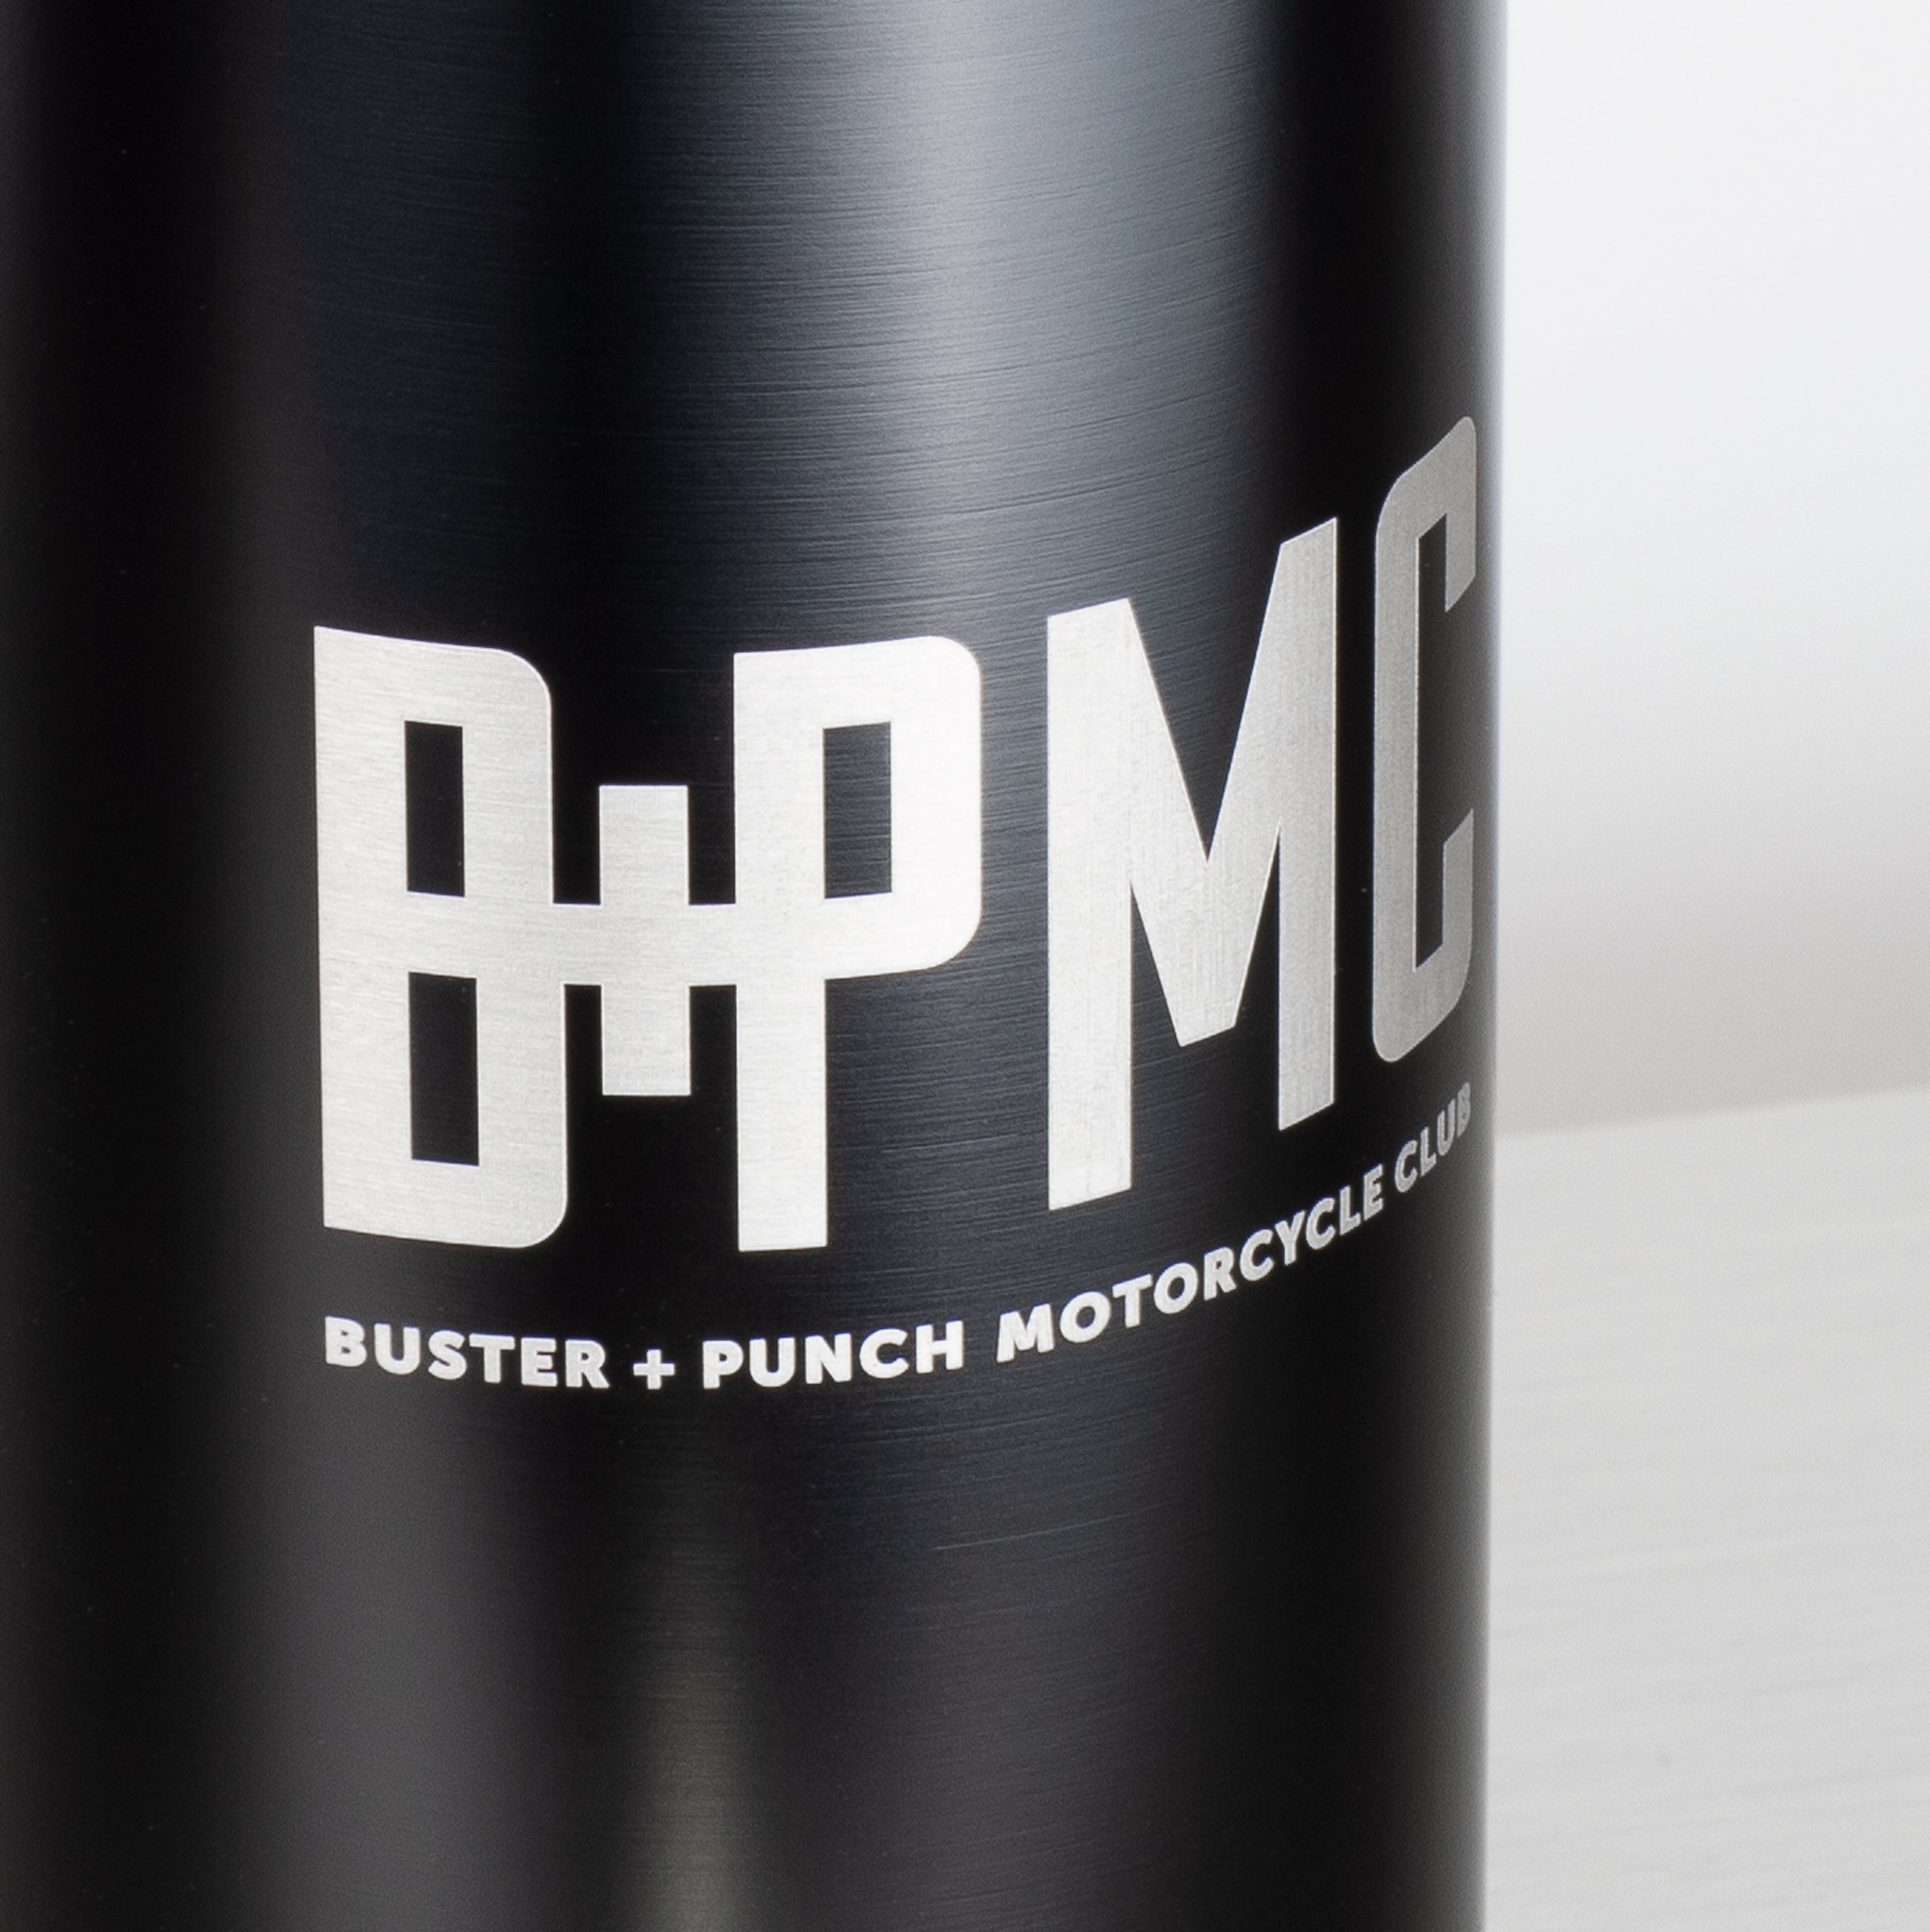 Drikkedunk i sort og rustfri stål med hank, skruelåg og med Buster + Punch logo.